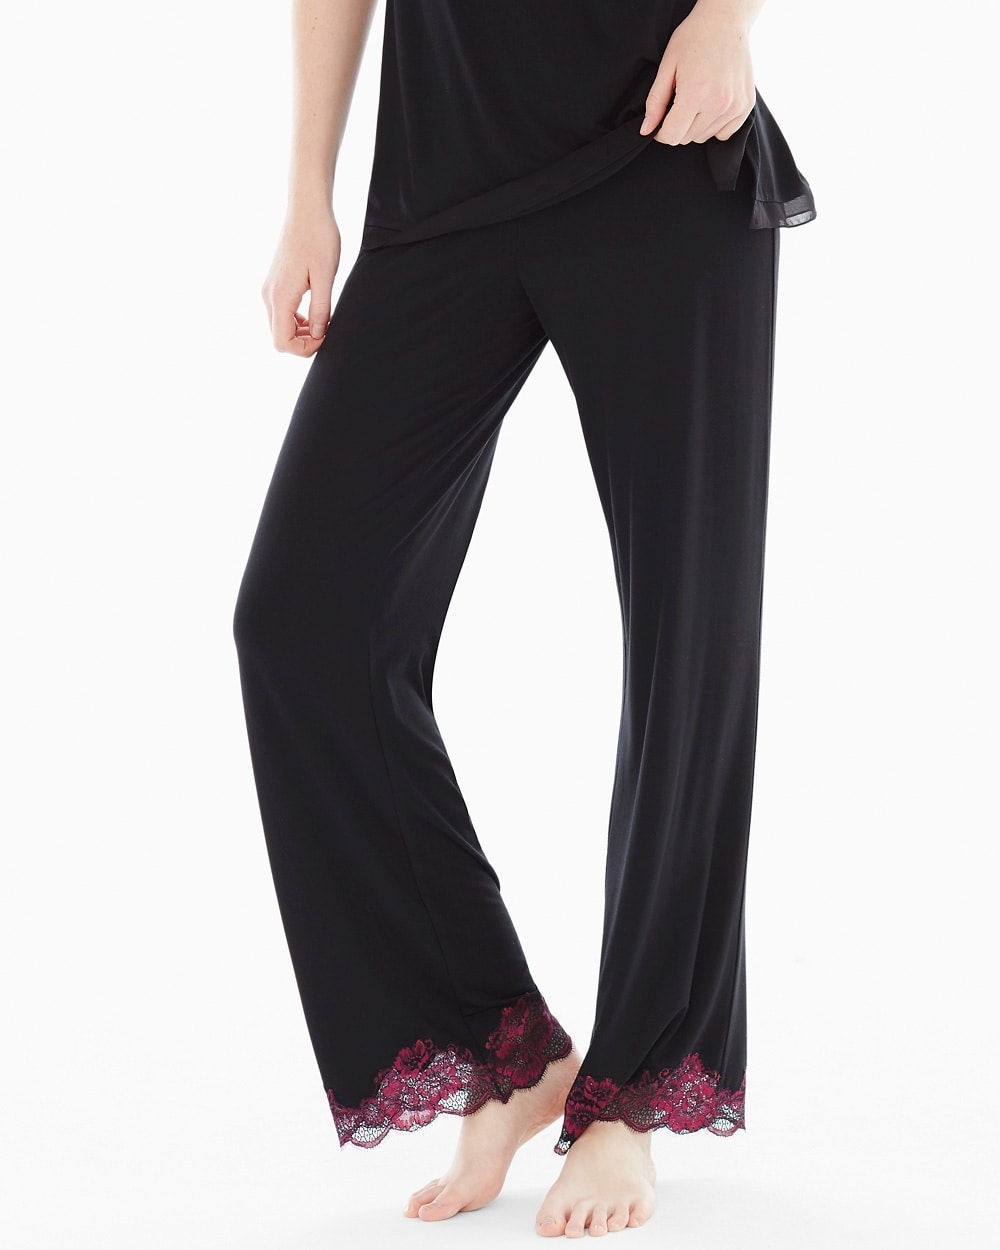 Floral Trellis Lace Pajama Pants Black/Honeysuckle